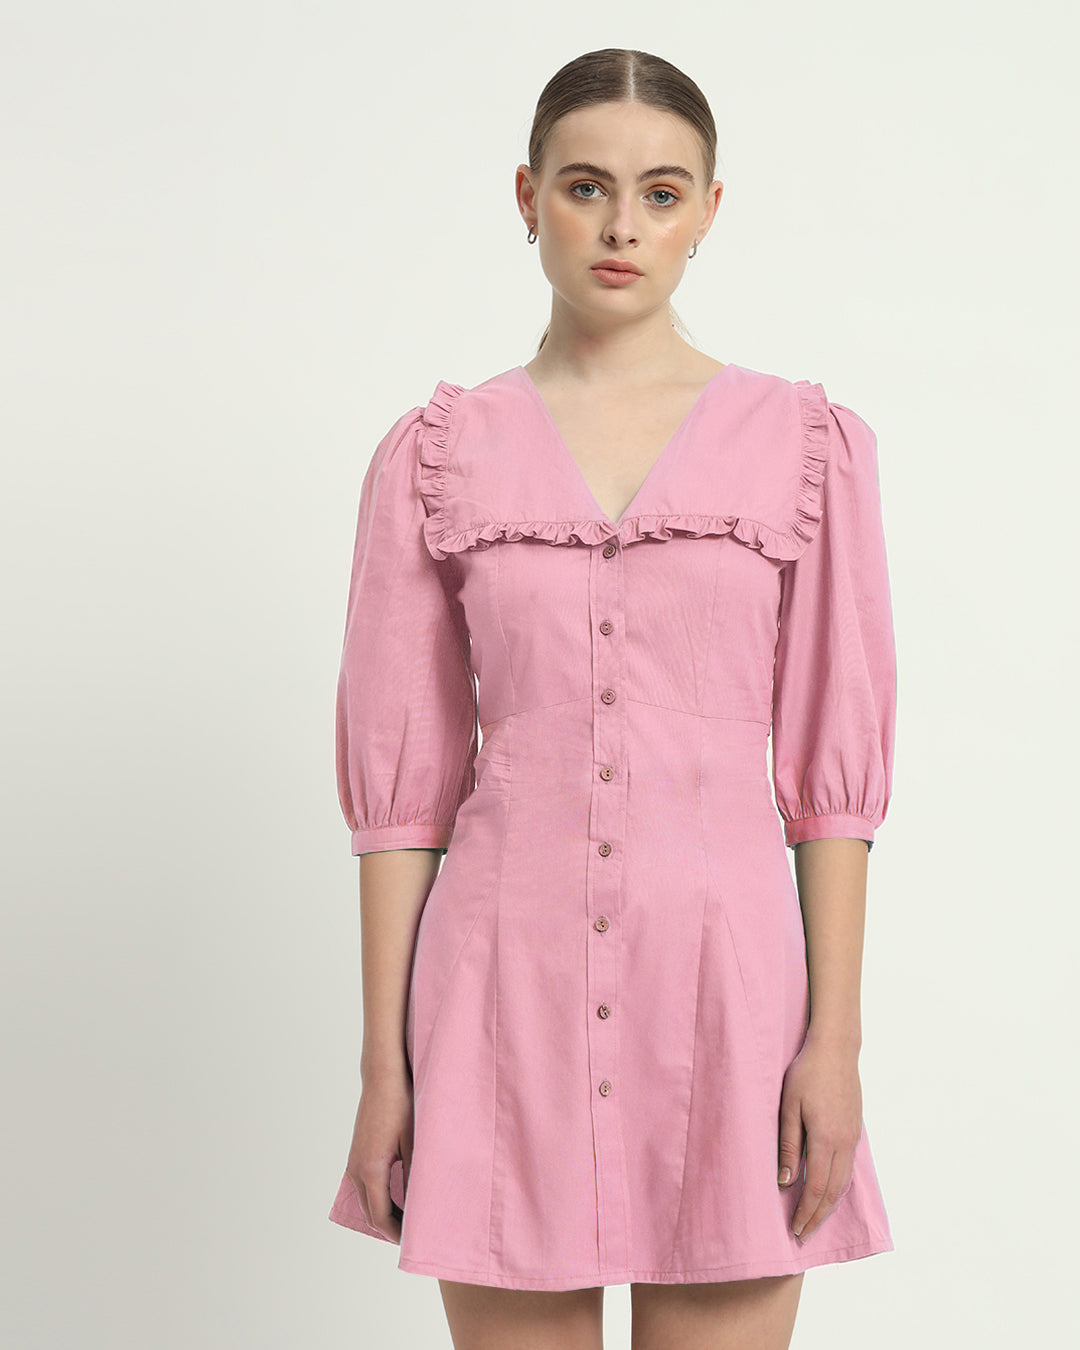 The Isabela Fondant Pink Cotton Dress